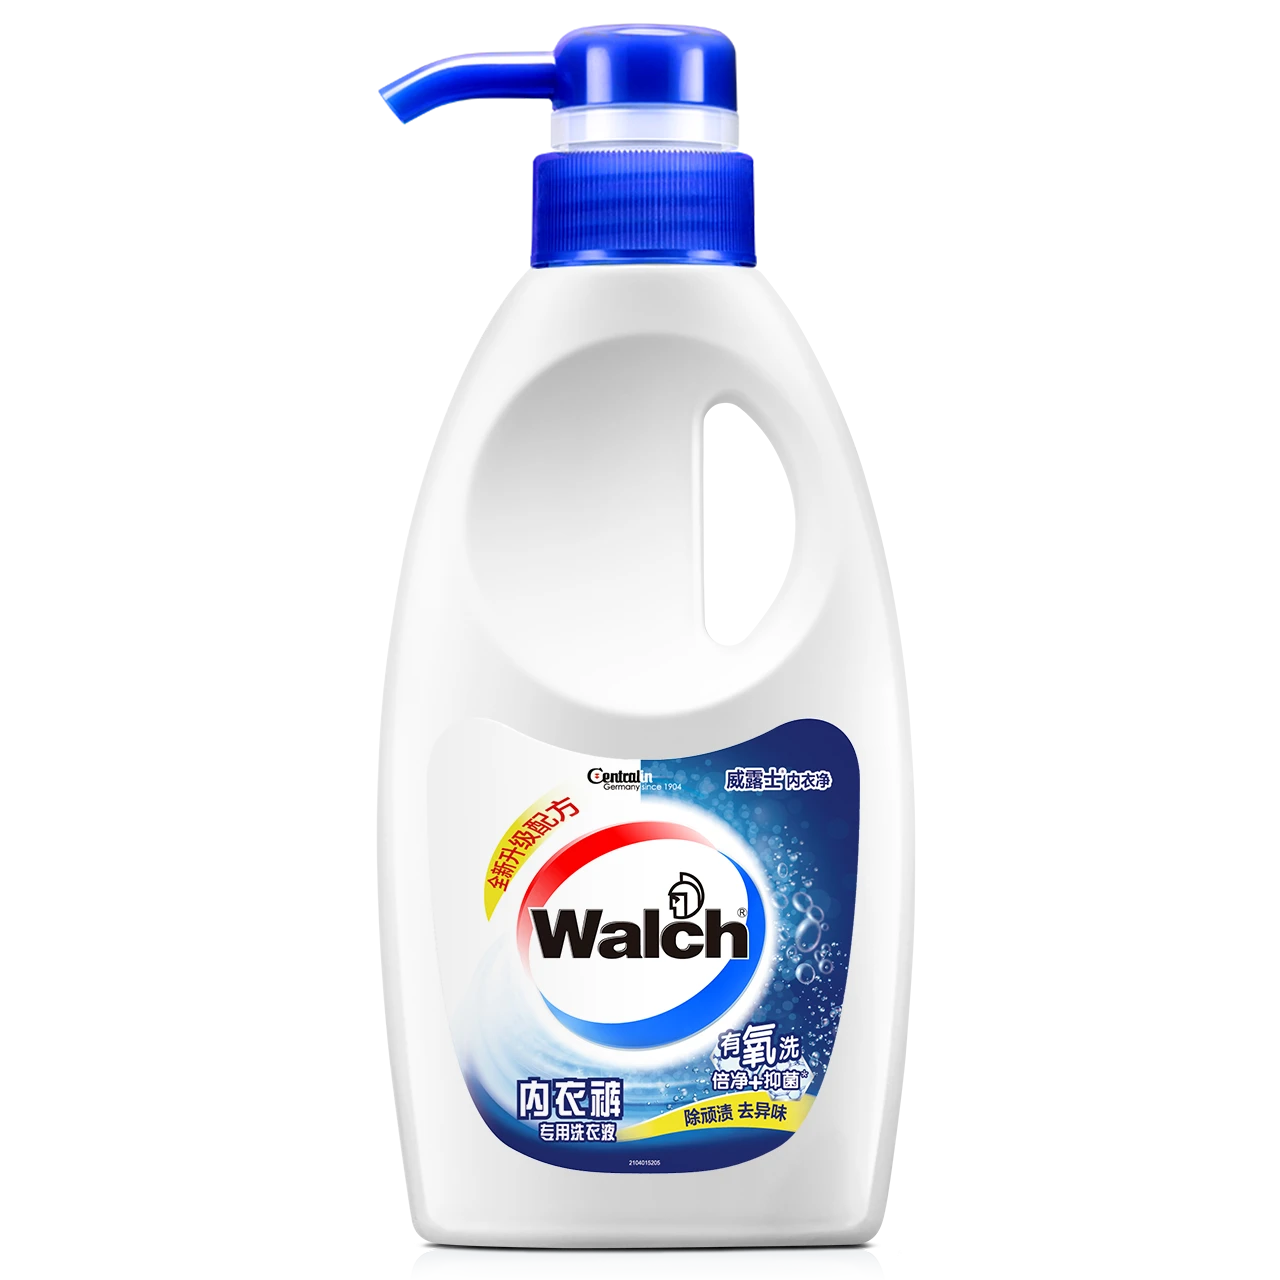 Durable OEM Walch Special cleaner for Underwear Laundry Detergent 300g lingerie wash comfort detergent